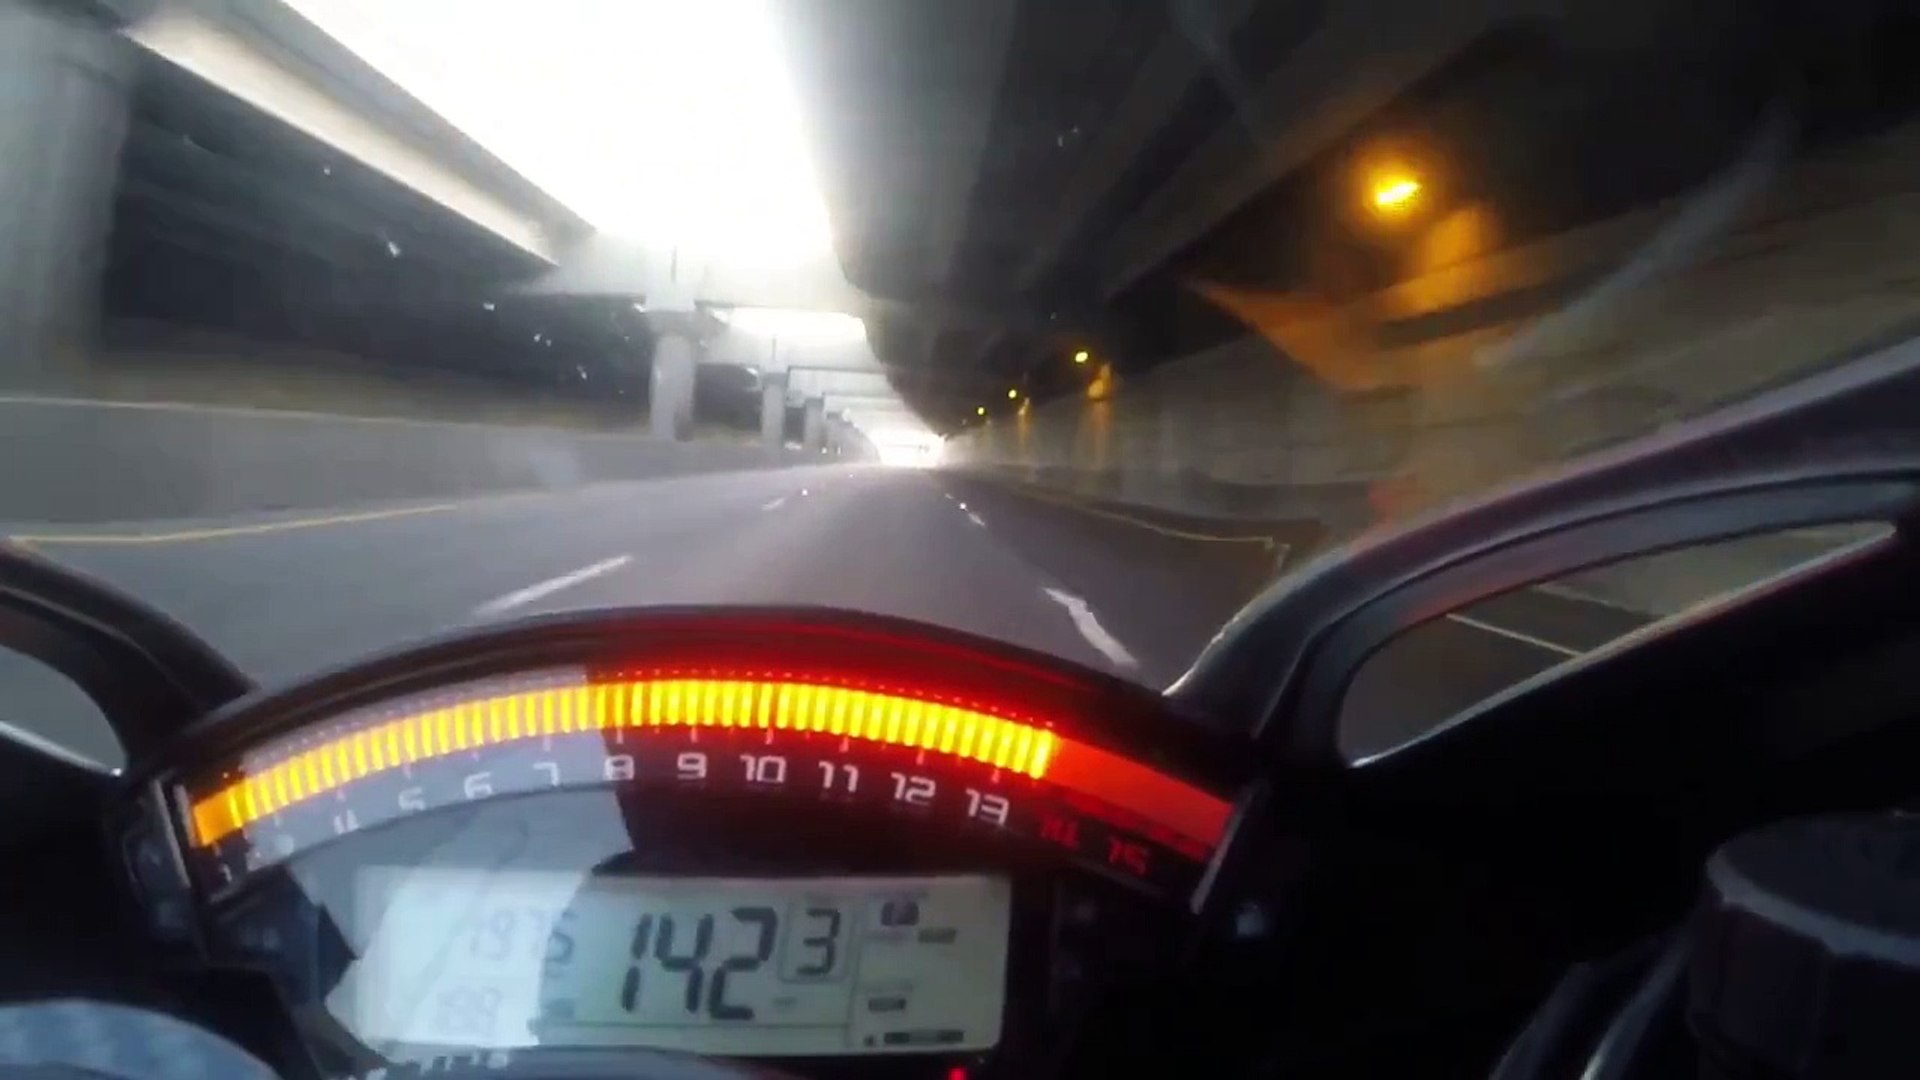 trojansk hest Tilbagetrækning Henholdsvis New Kawasaki ZX10R TOP SPEED (197MPH) - video Dailymotion